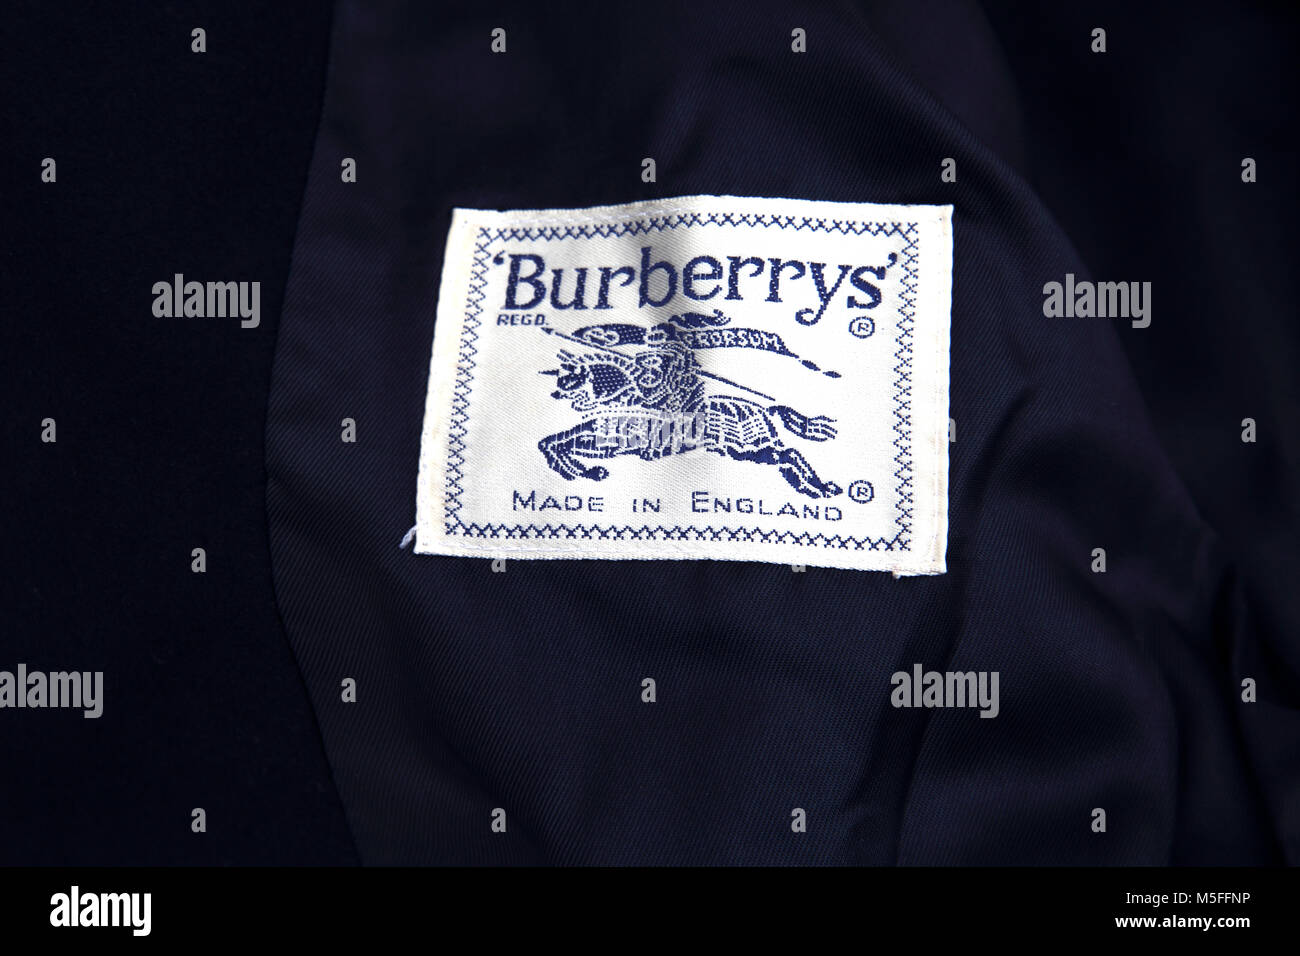 Label inside Black Burberrys Jacket Suit Stock Photo - Alamy